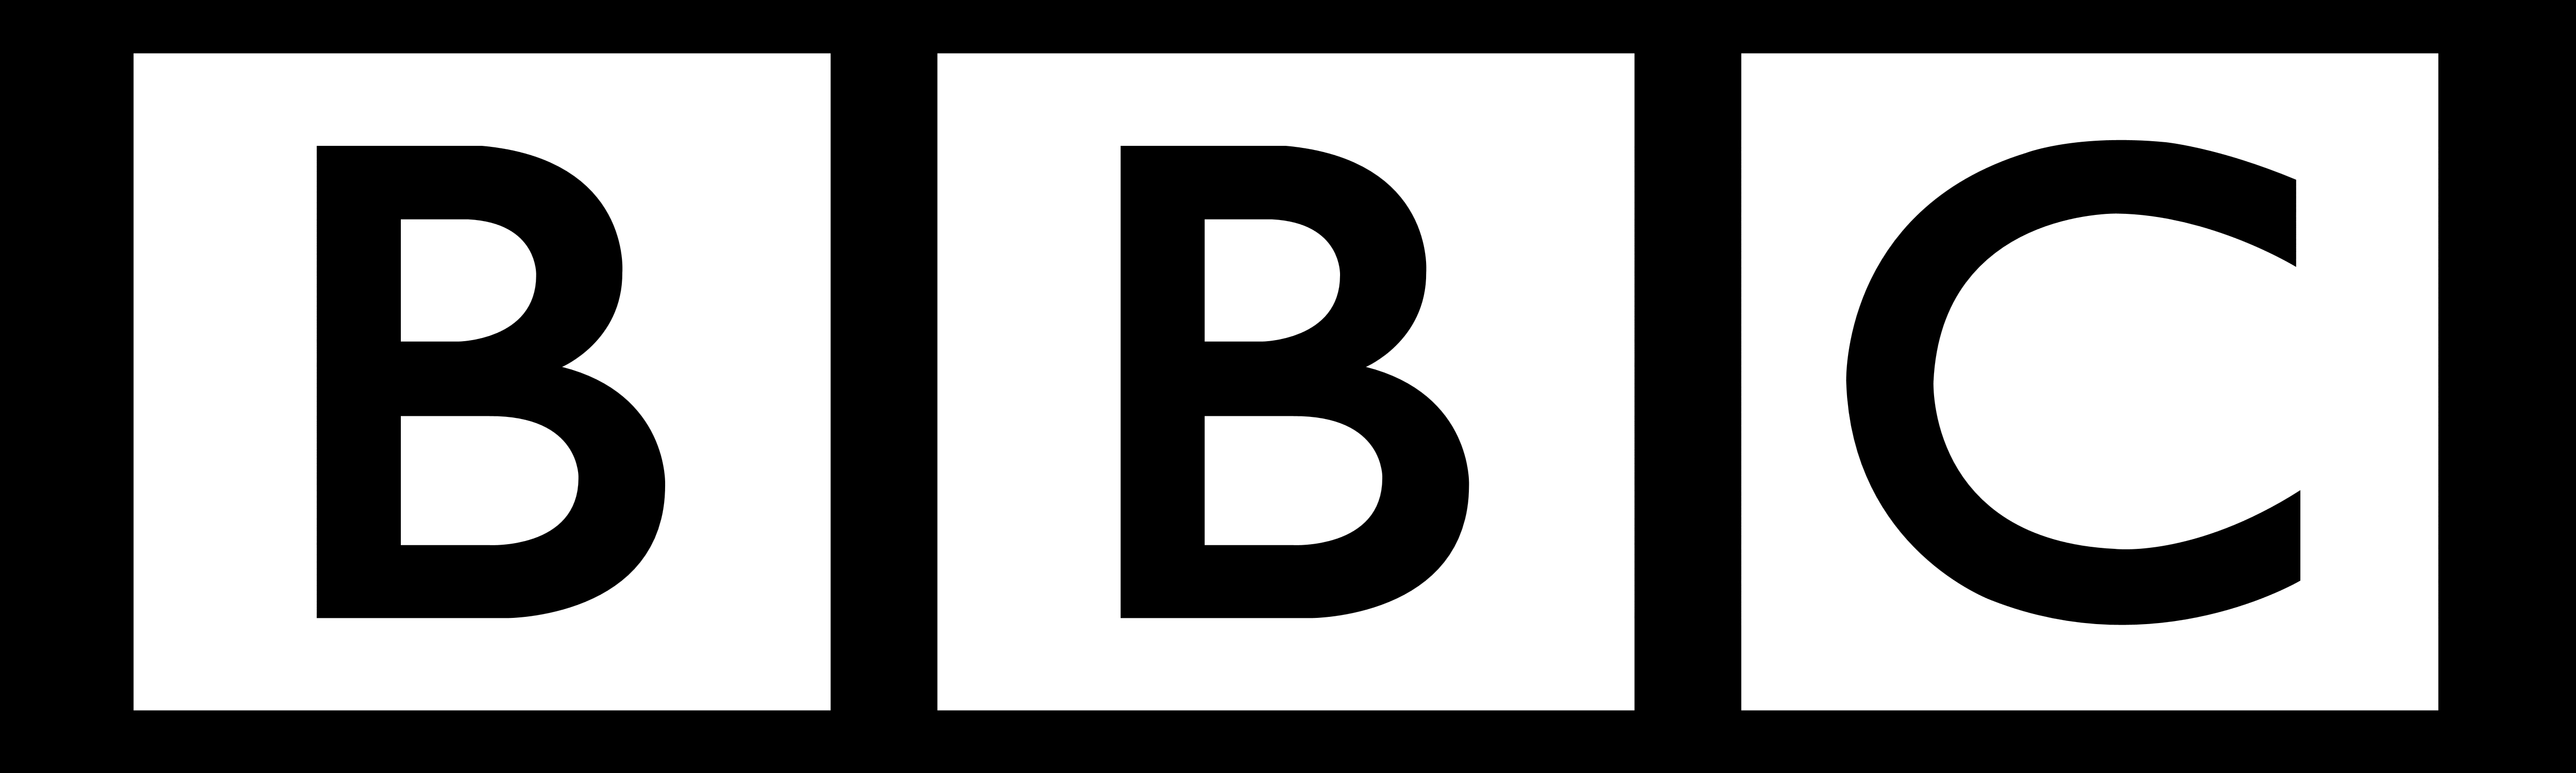 Bbc Logo PNG - 178601